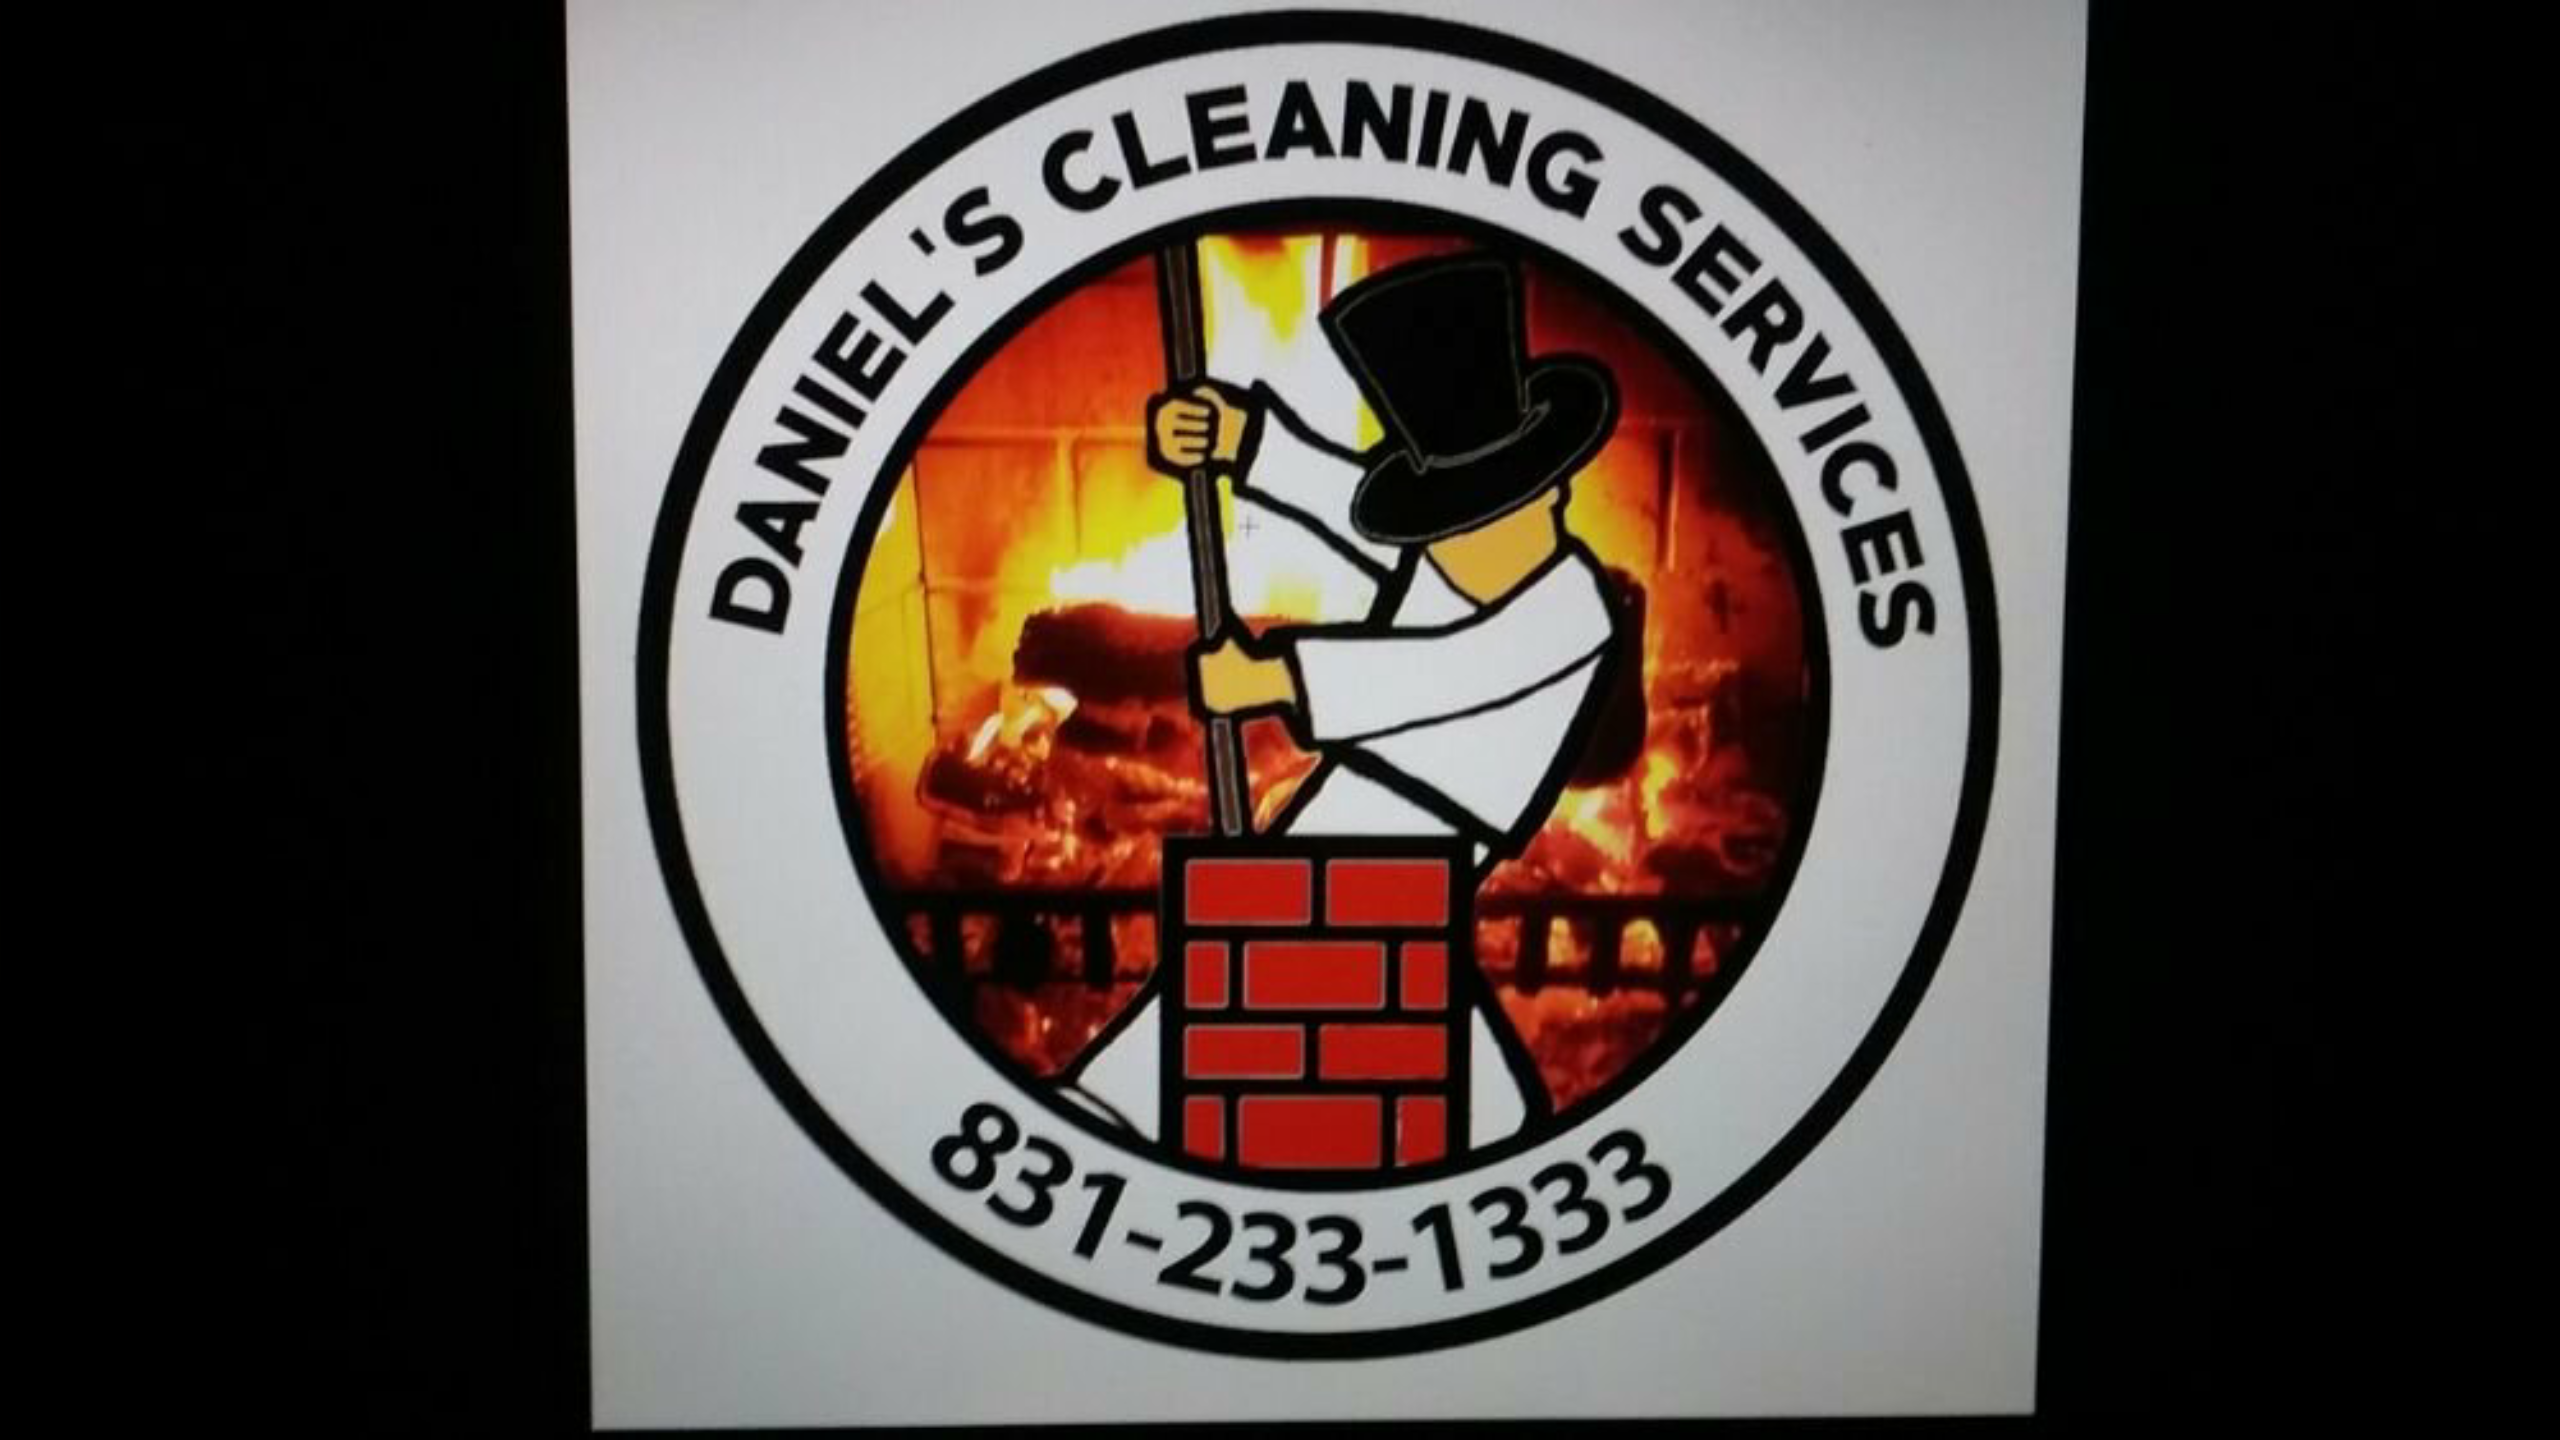 Daniel's Cleaning Service Logo